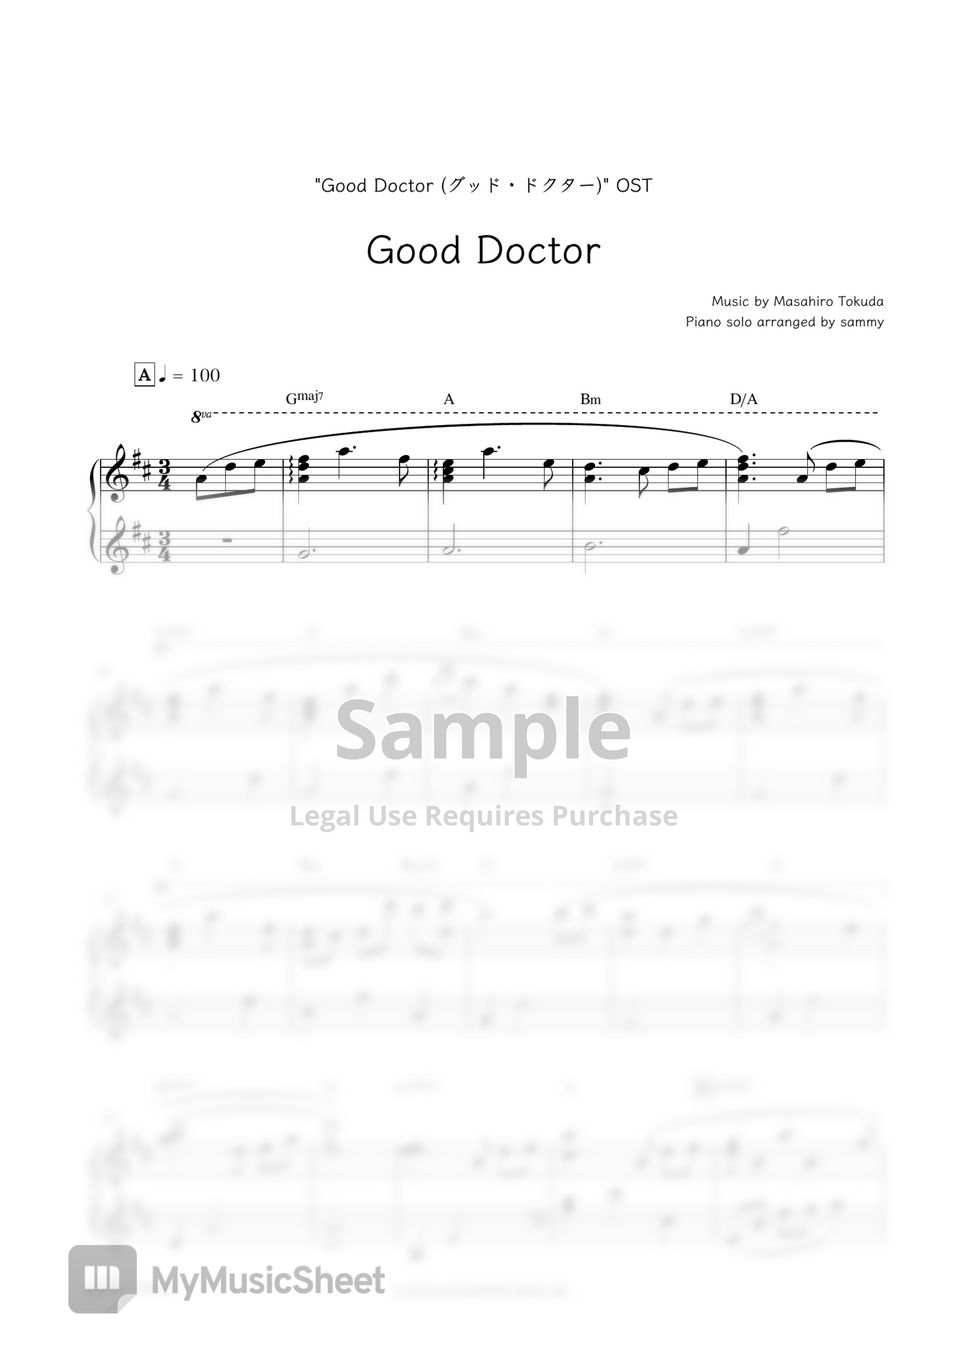 Japanese TV series "Good Doctor" OST - Good Doctor (グッド・ドクター) by sammy